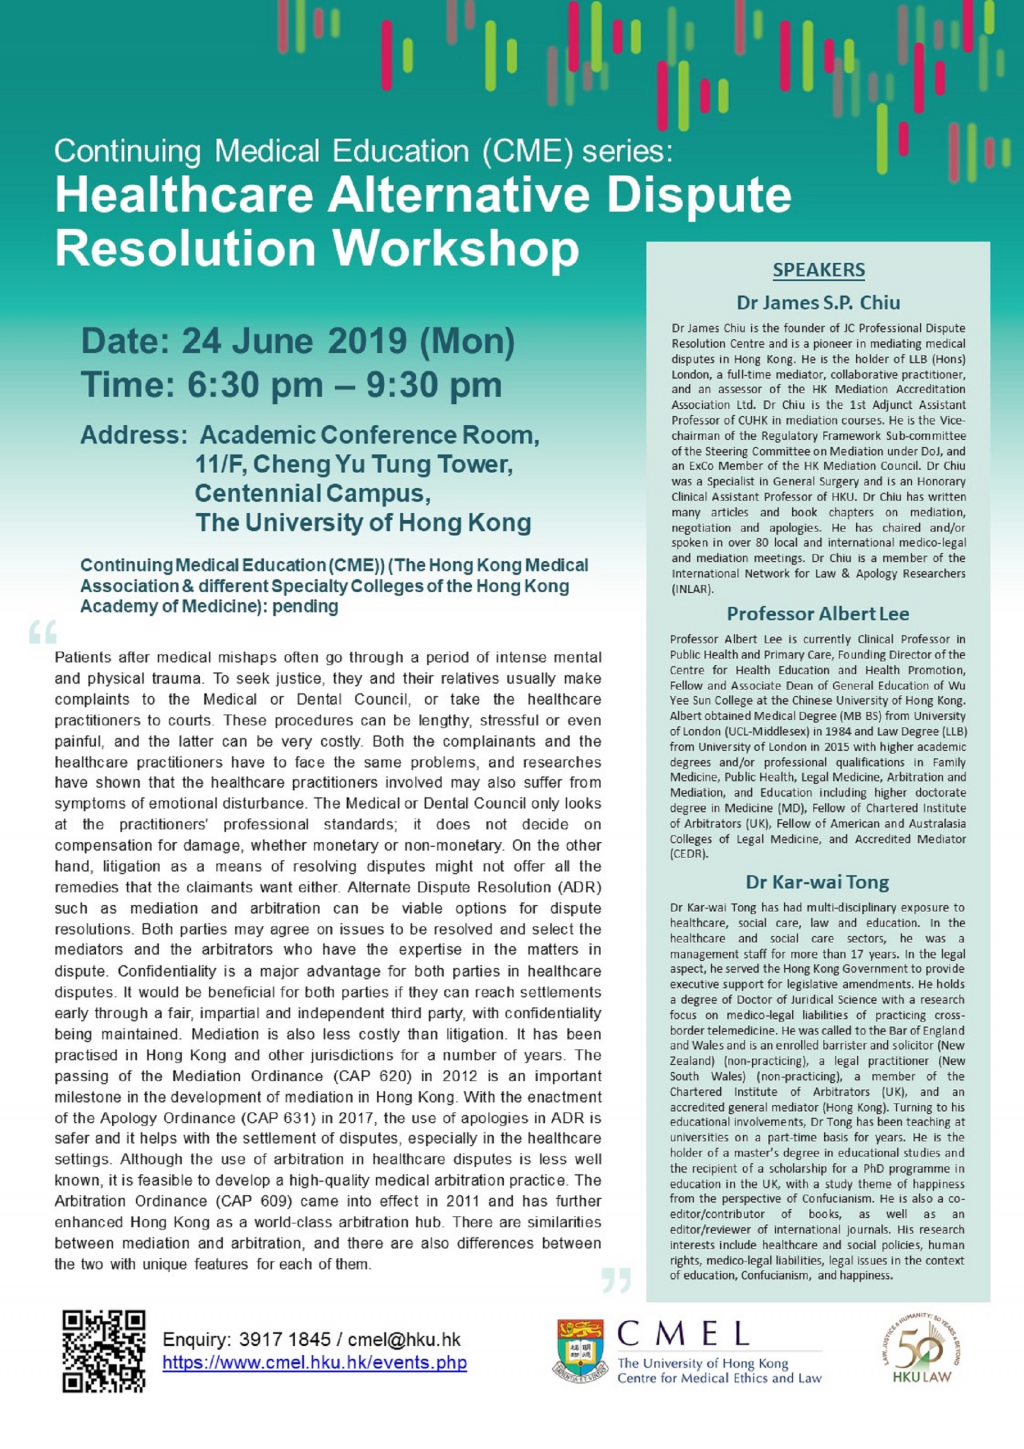 Continuing Medical Education (CME) series: Healthcare Alternative Dispute Resolution Workshop (Jun 24, 6:30pm, 11/F CCT)